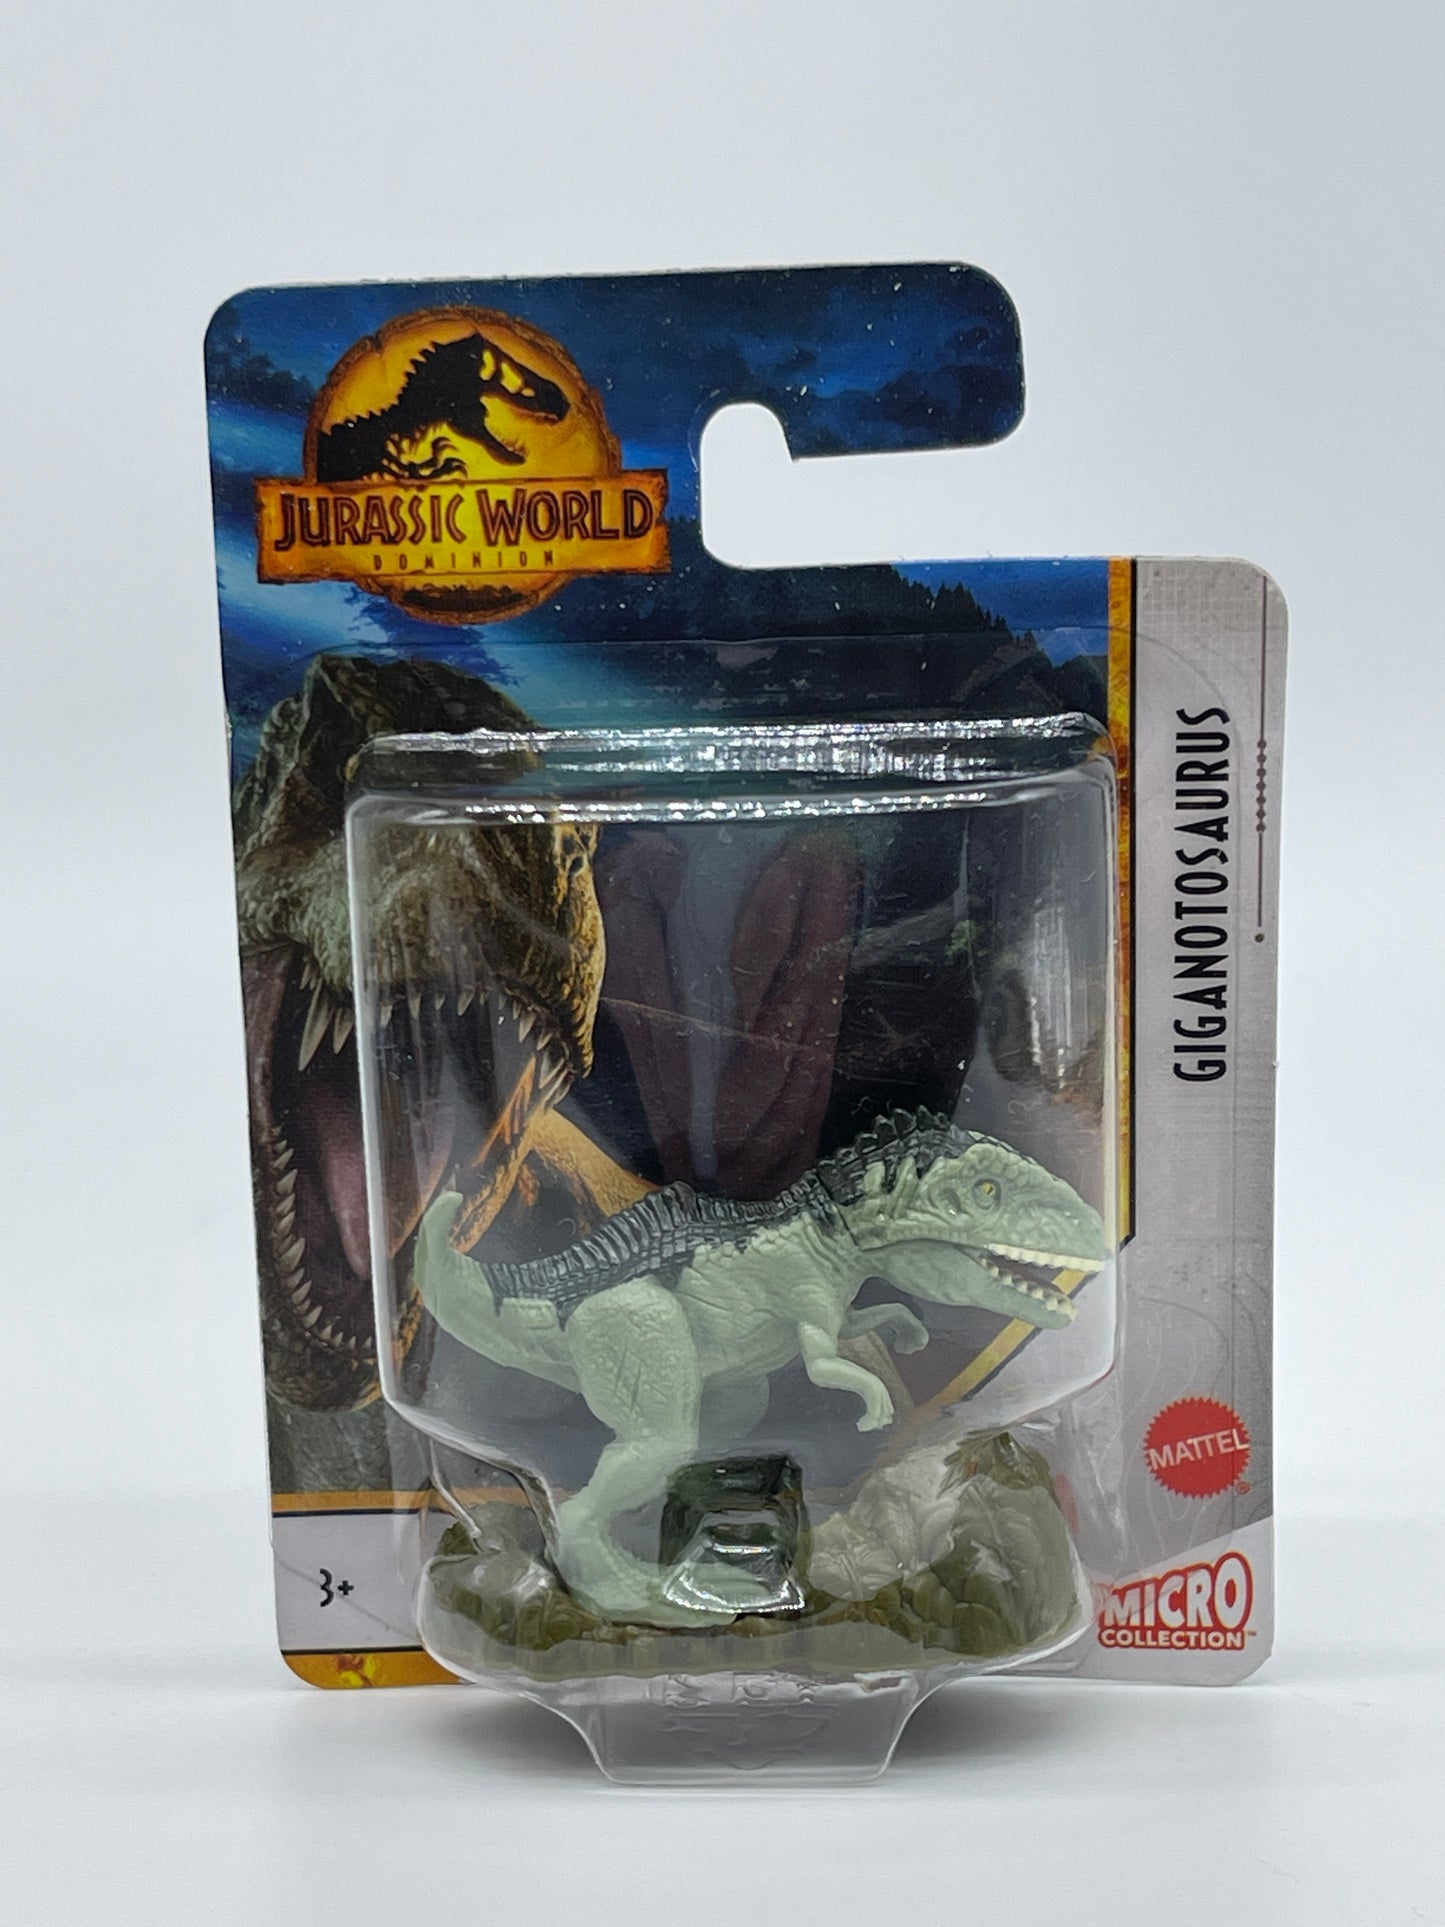 Jurassic World Dominion Micro Collection Mini Figures, Mattel 2021 (Selection) 